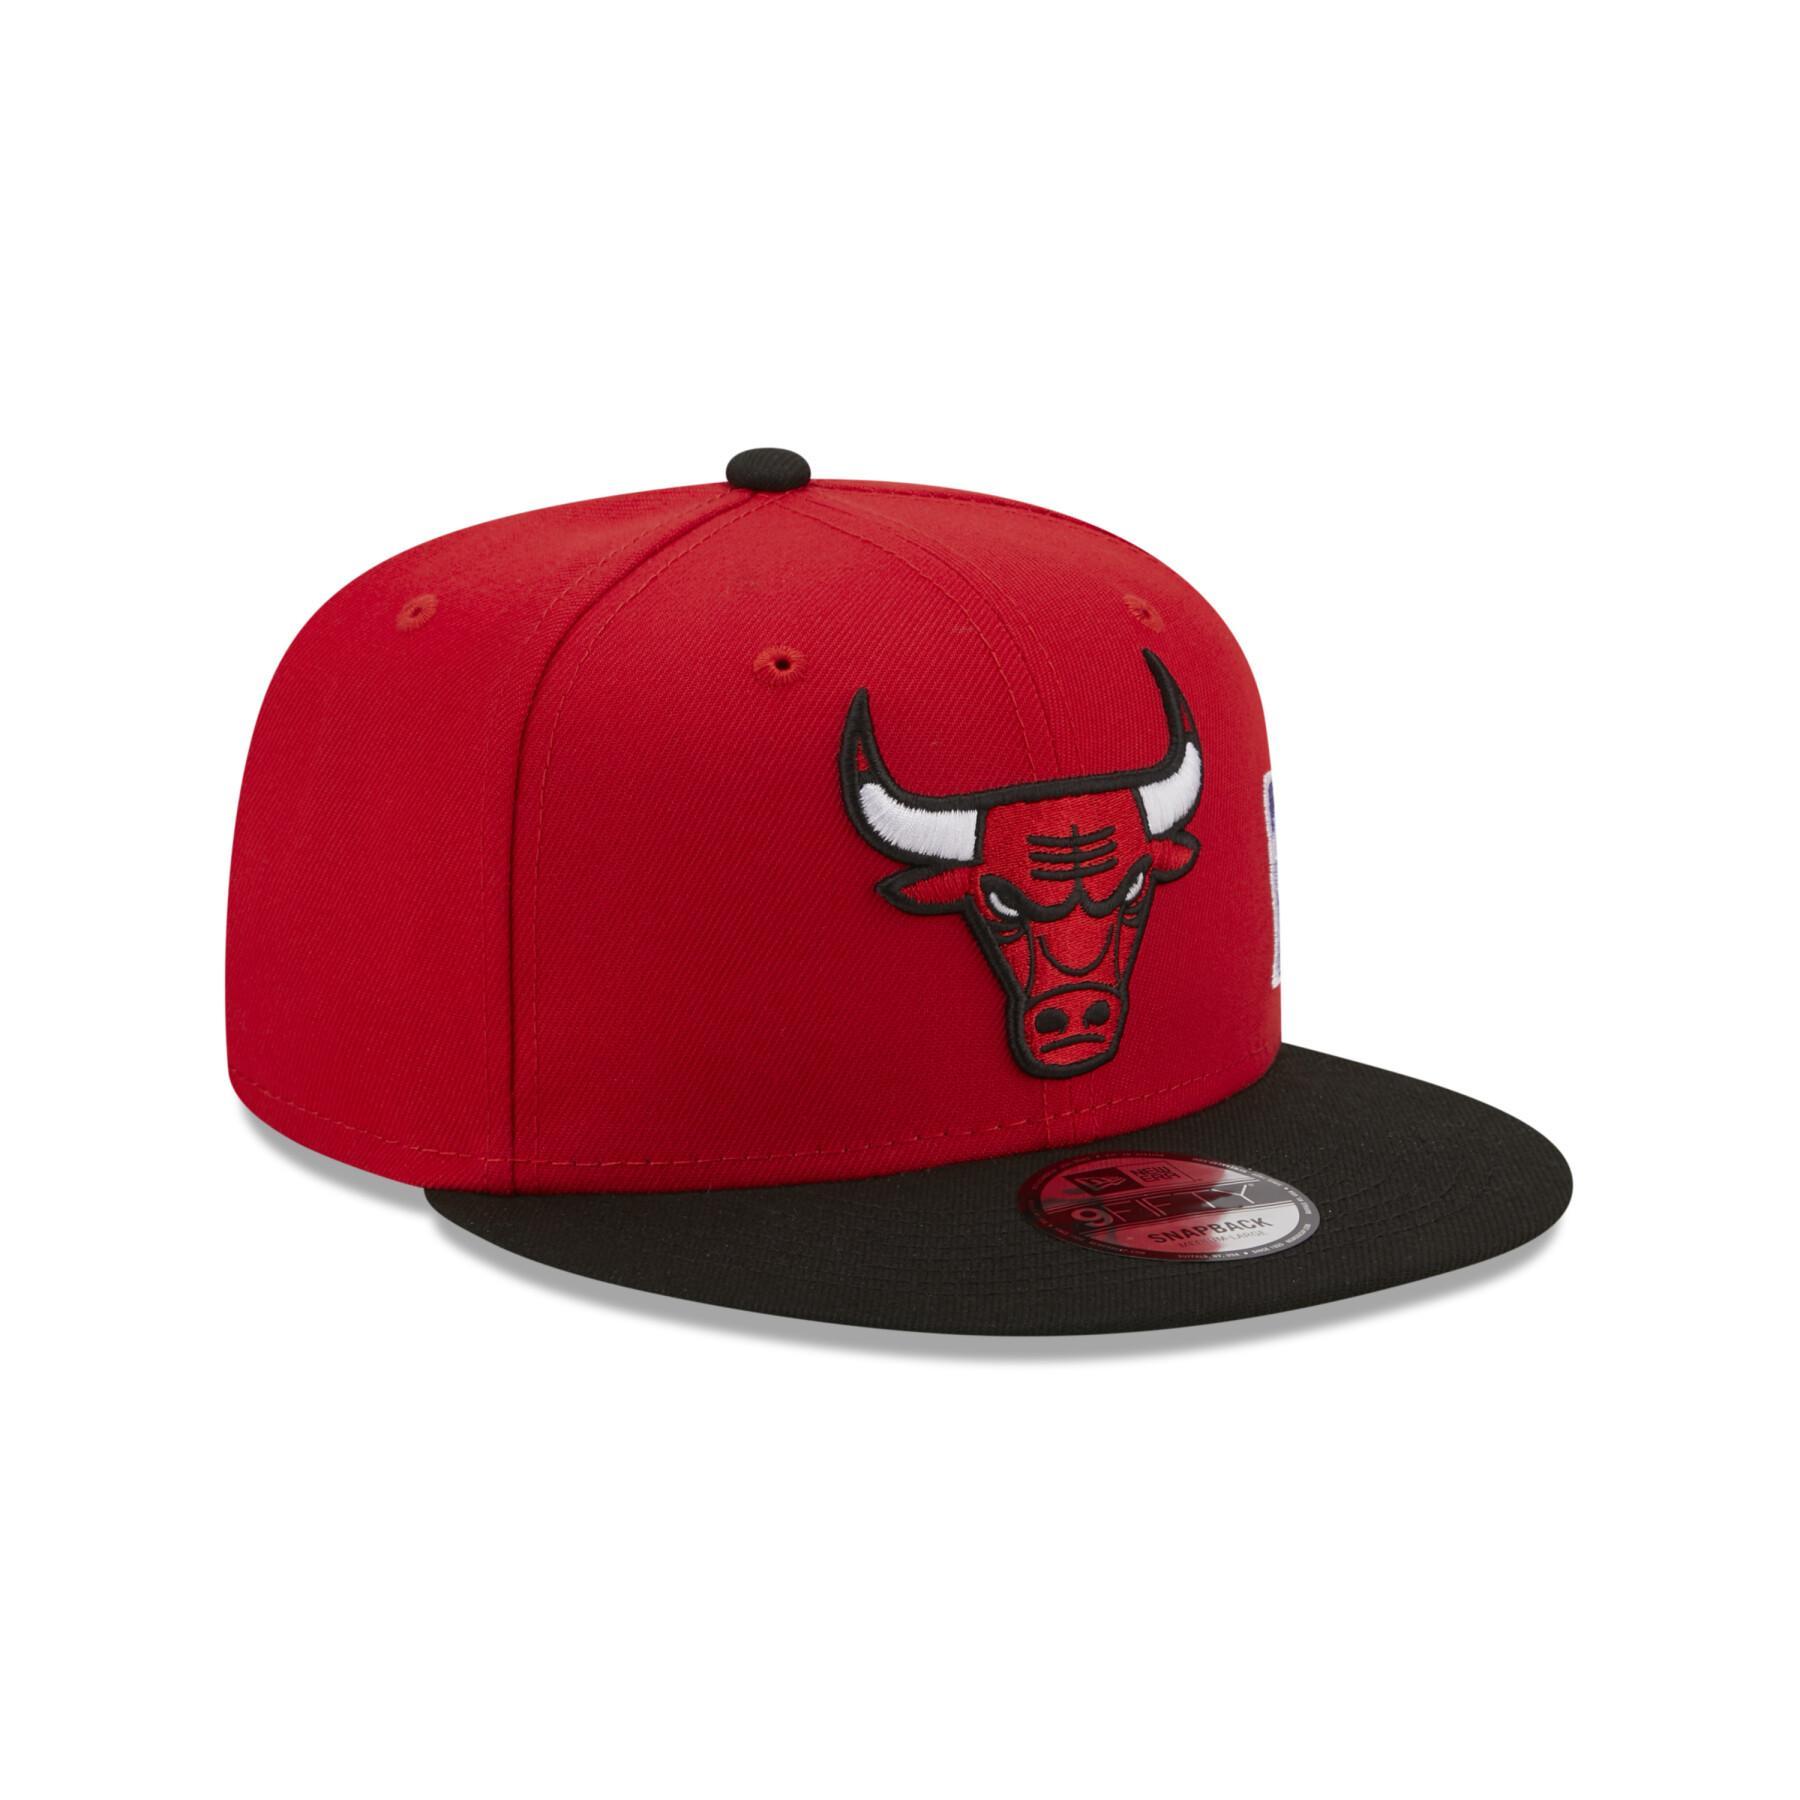 9fifty cap Chicago Bulls